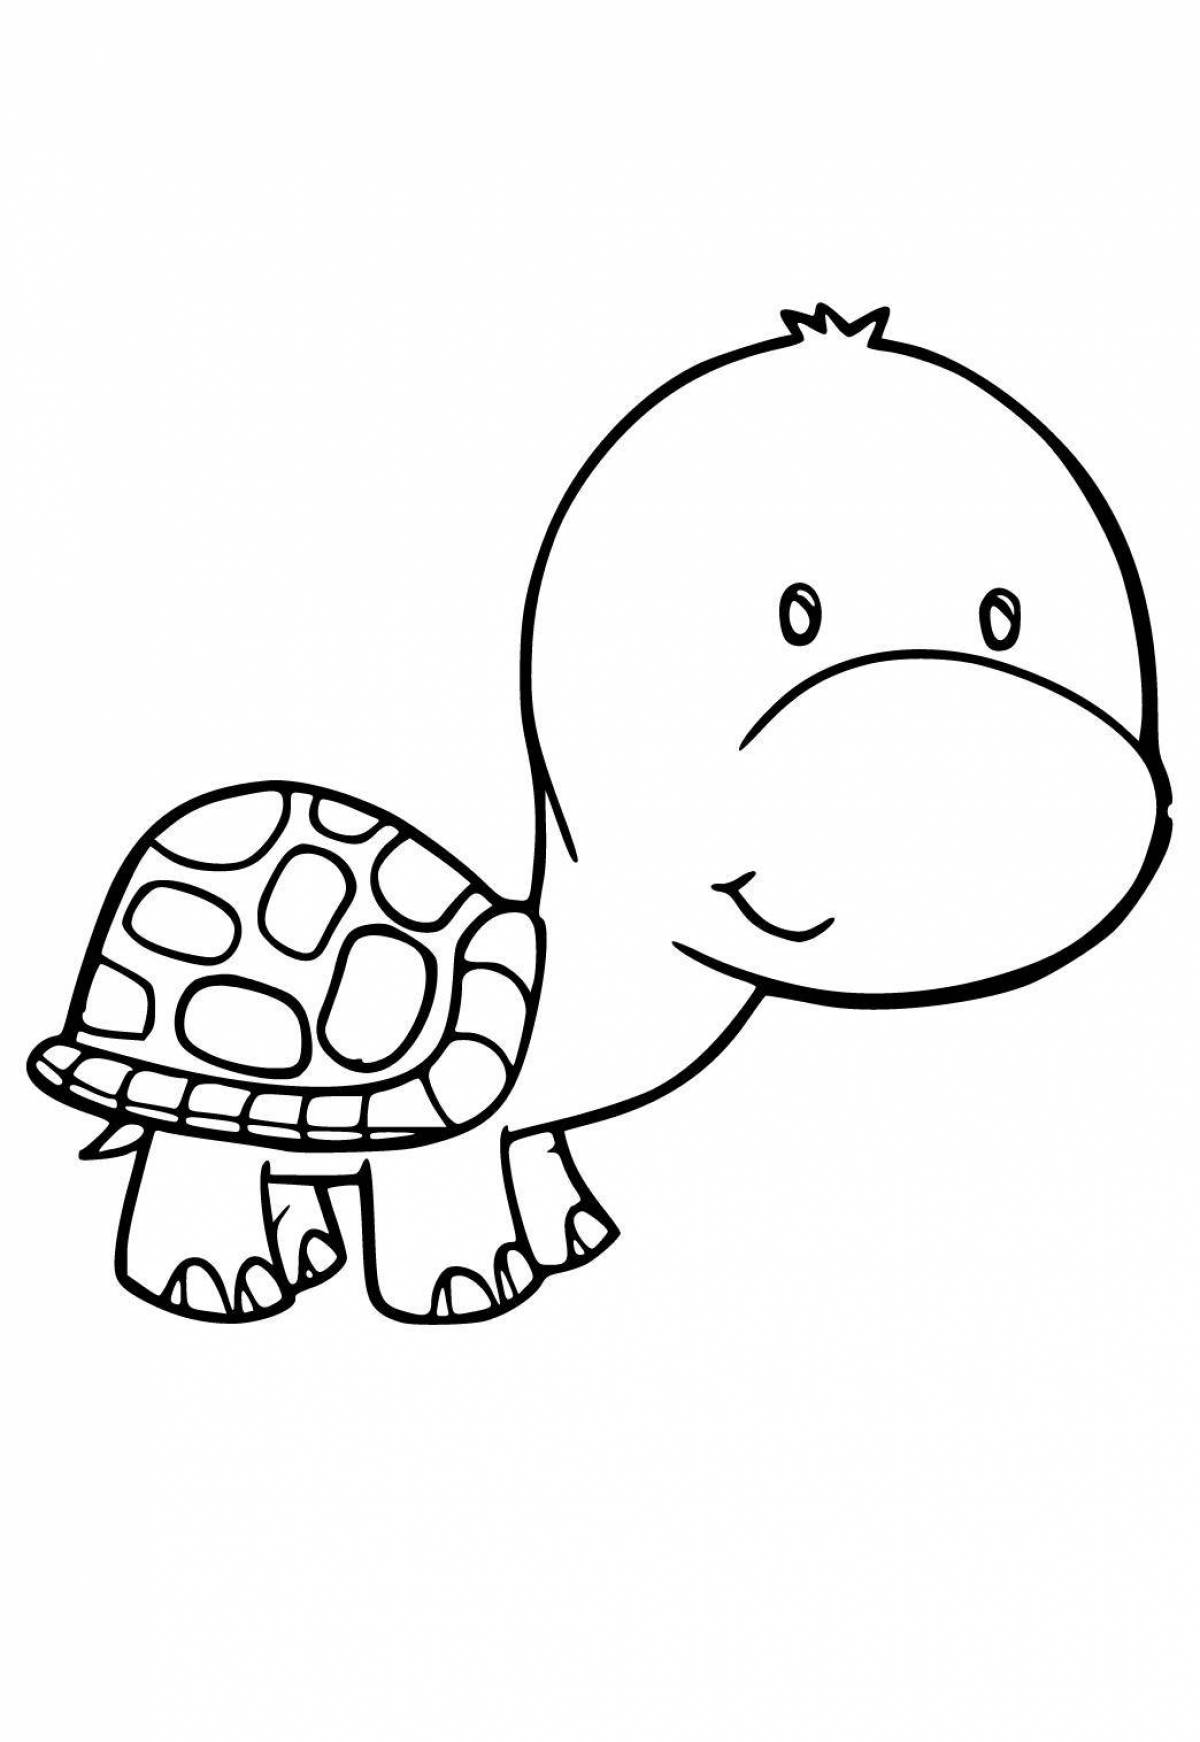 Nice cute turtle coloring book